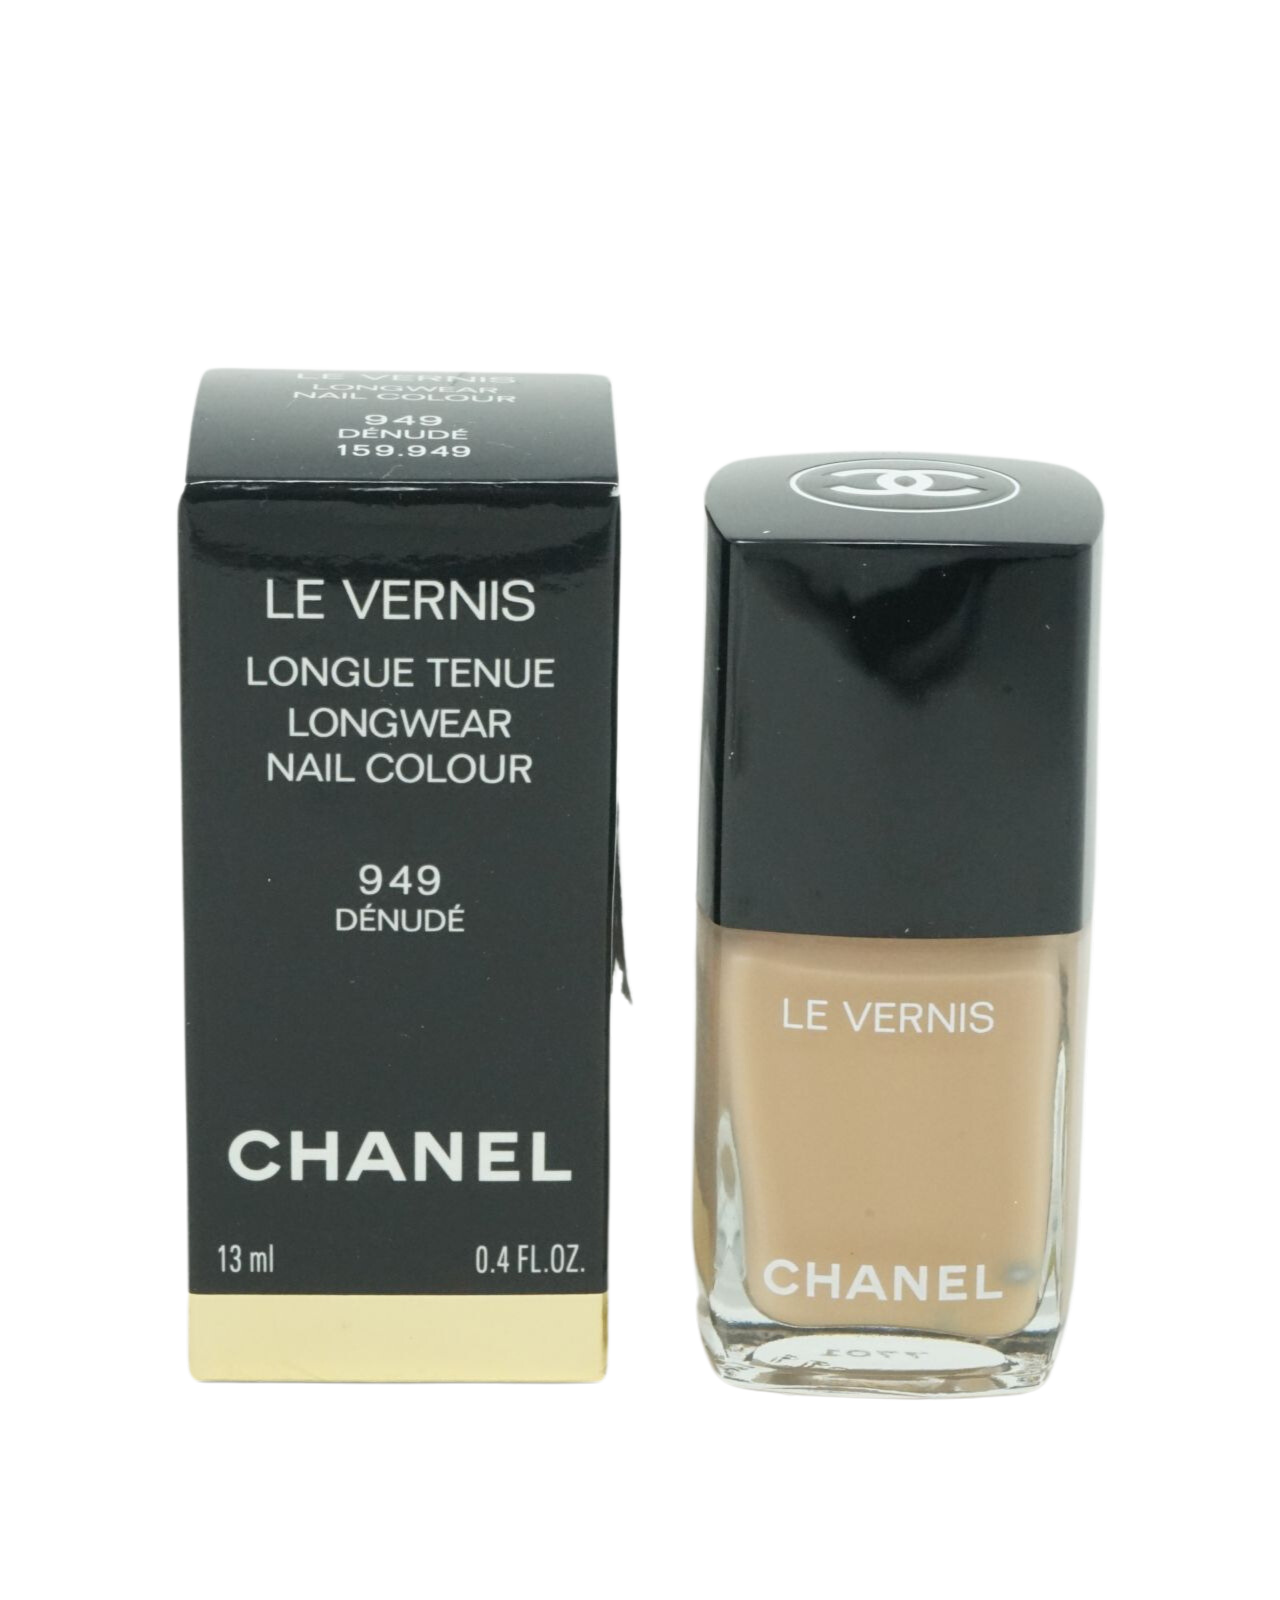 Chanel Le Vernis Longwear Nagellack 13ml 949 Denude